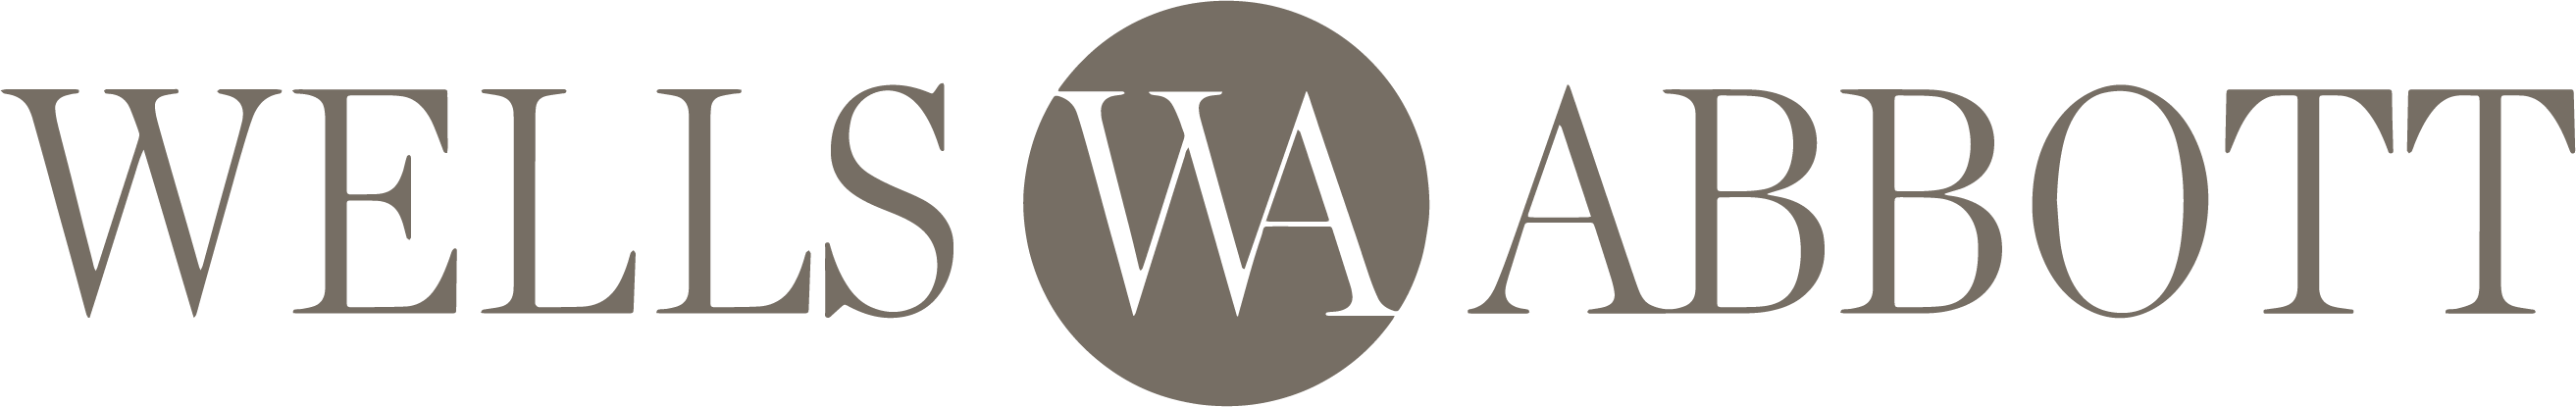 wells abbott WA logo color large